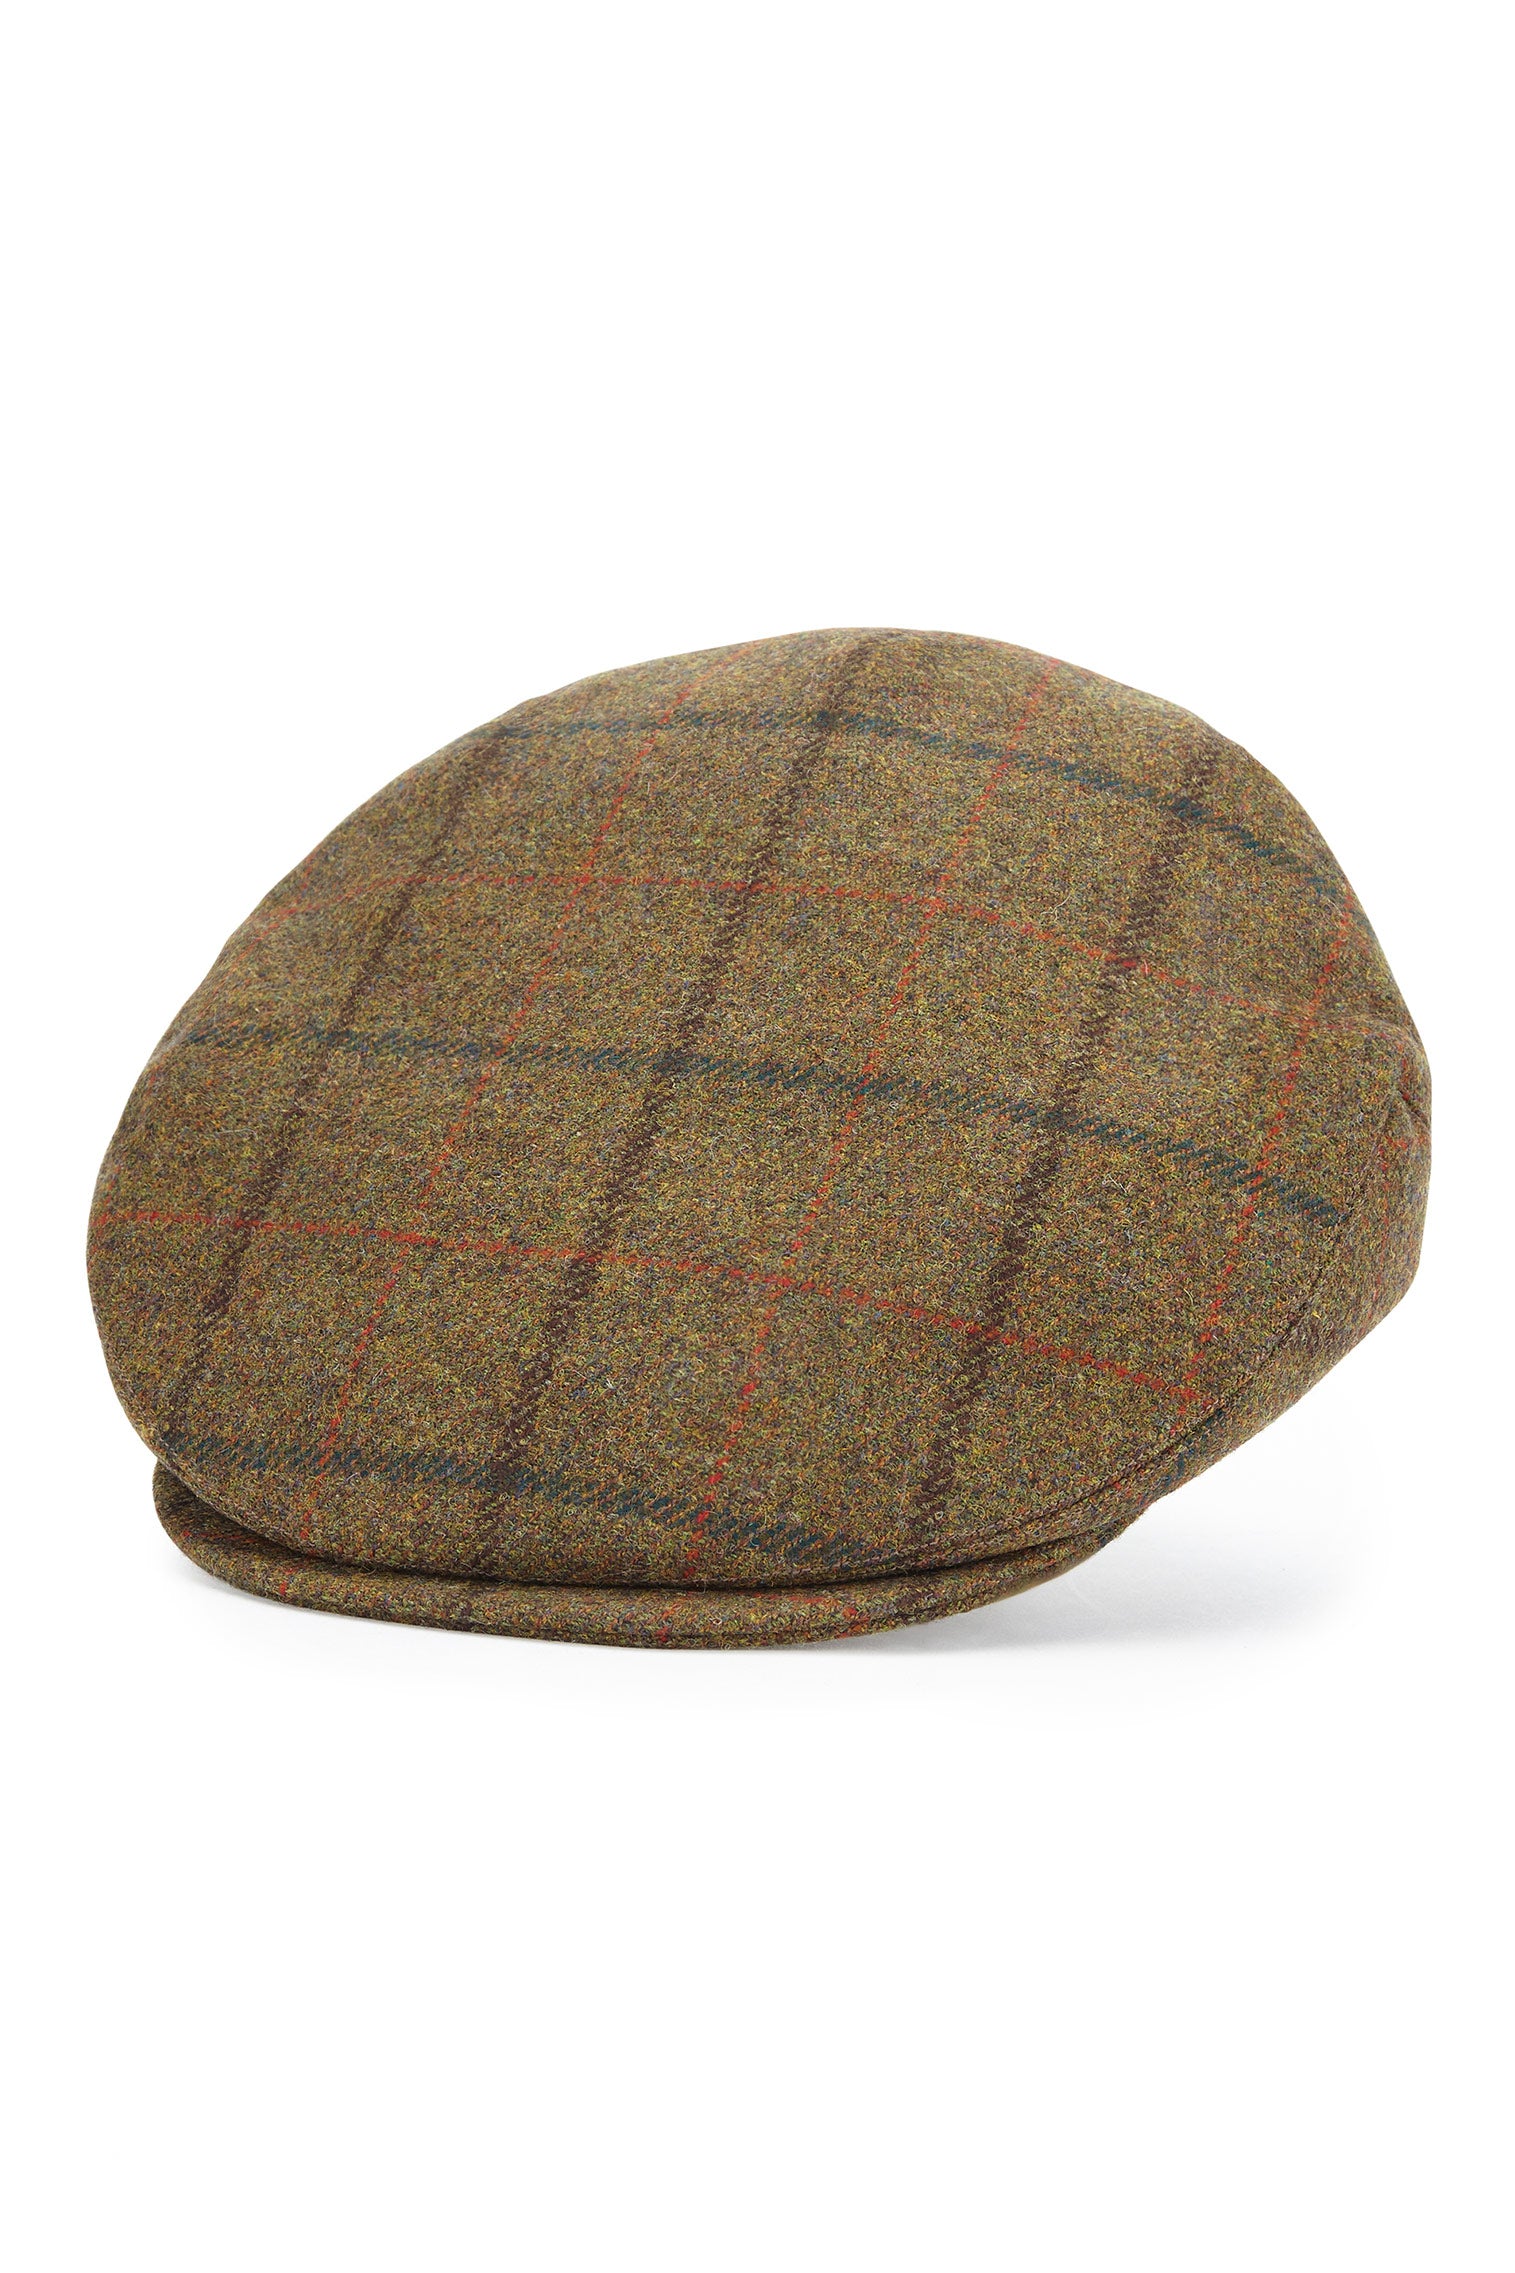 Turnberry Tweed Flat Cap - Hats for Slimmer Frames - Lock & Co. Hatters London UK